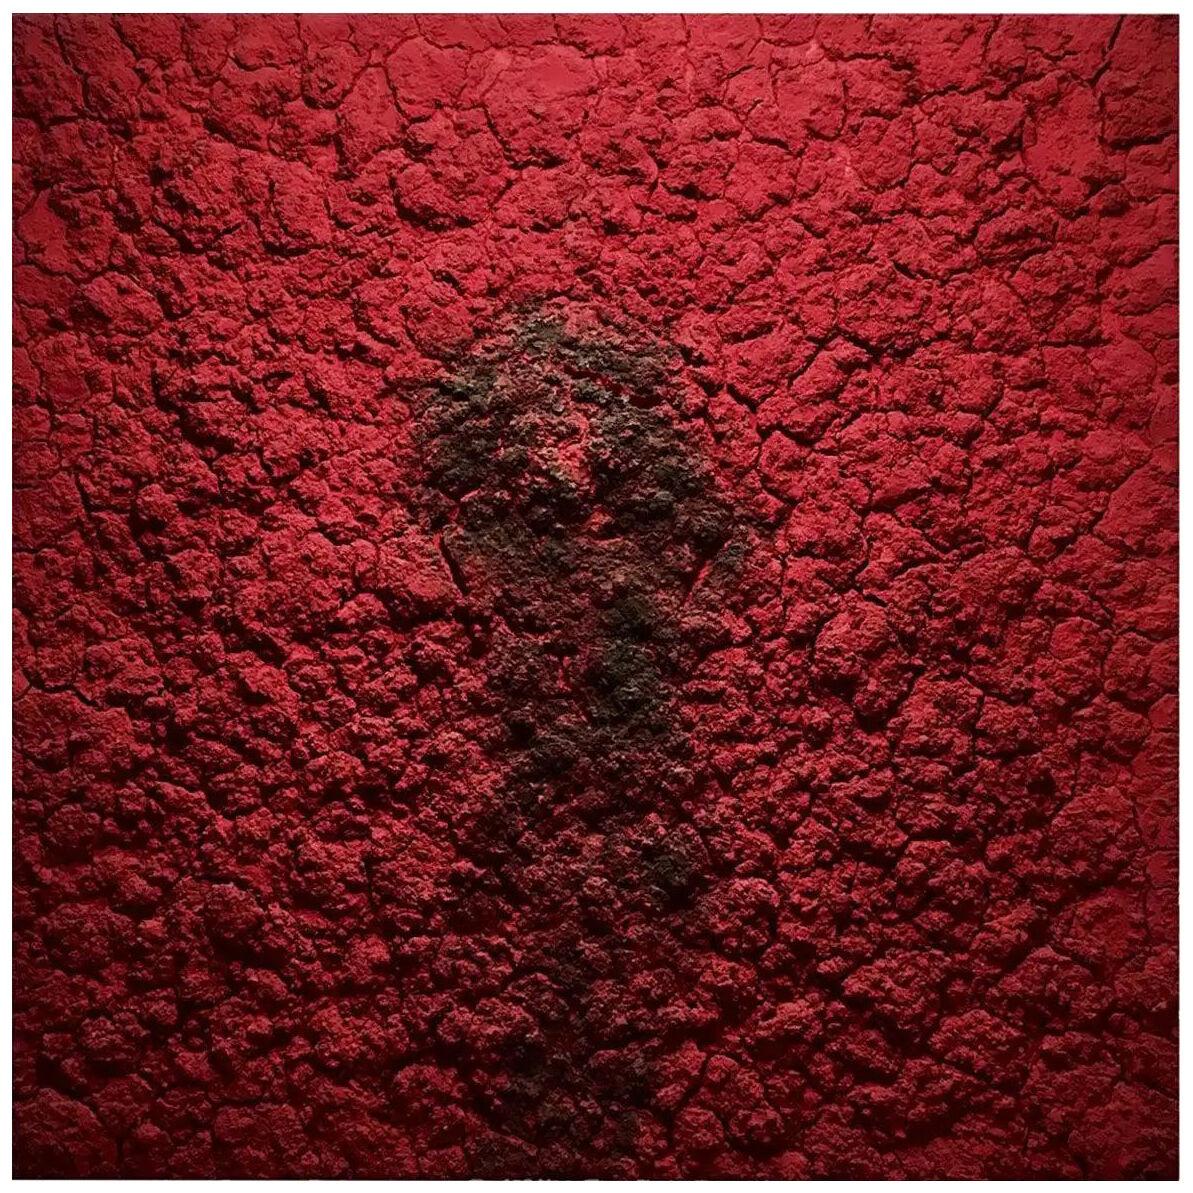 Bosco Sodi Contemporary Mixed-Media on Canvas Red Artwork, 2012